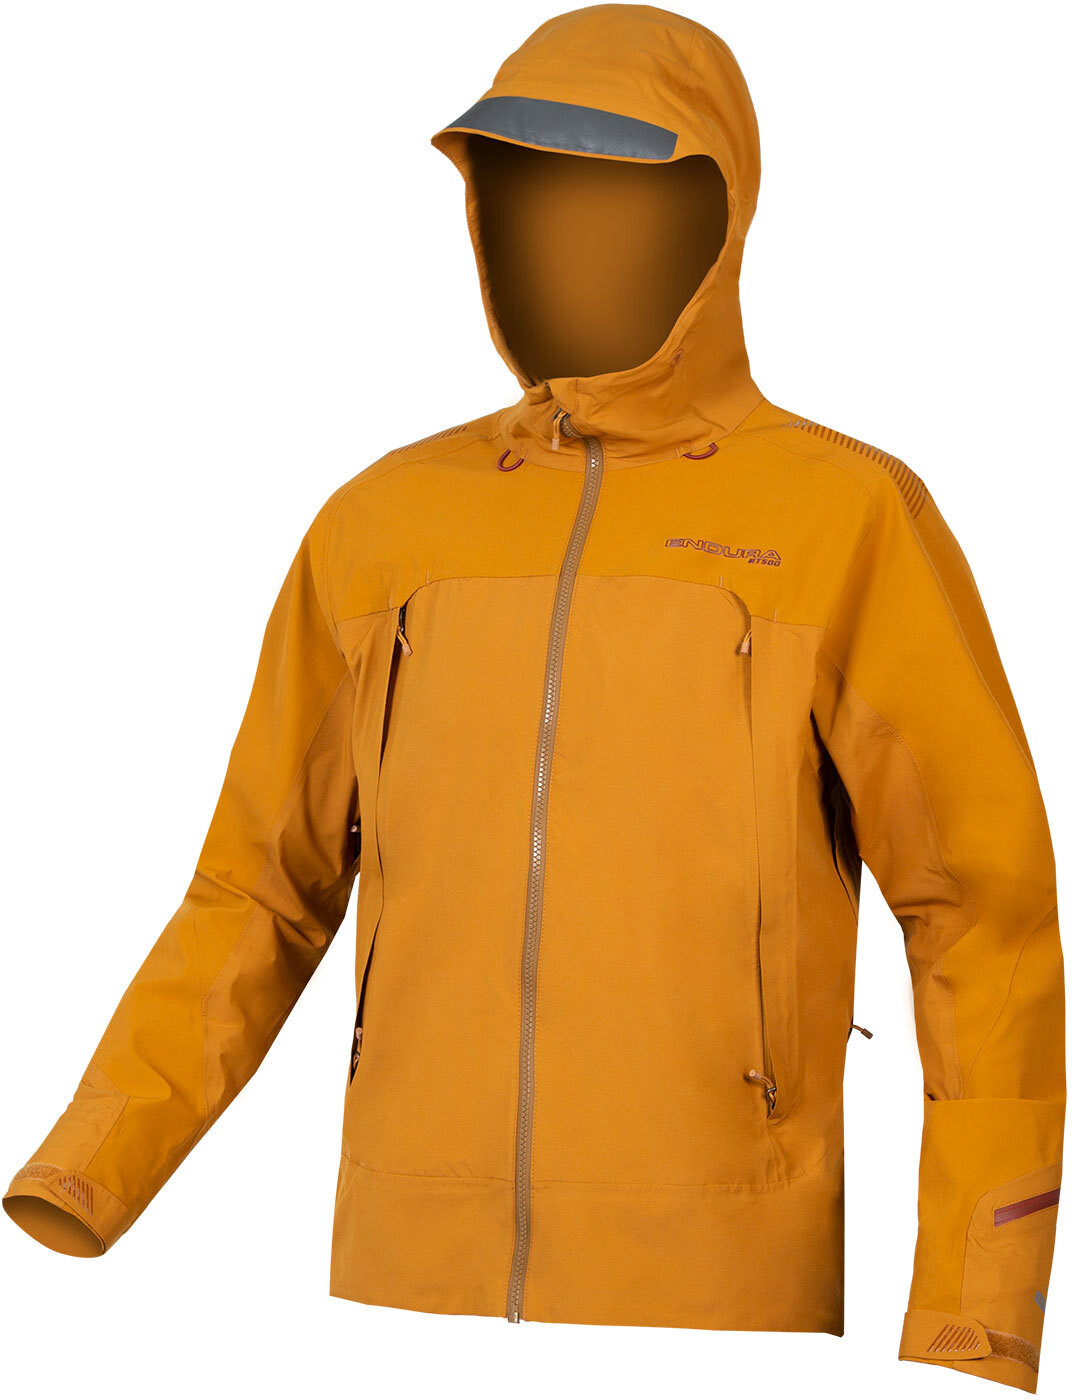 Grosvenor PU Reflektierender Regenmantel Fahrradjacke Jacke wasserdicht orange 